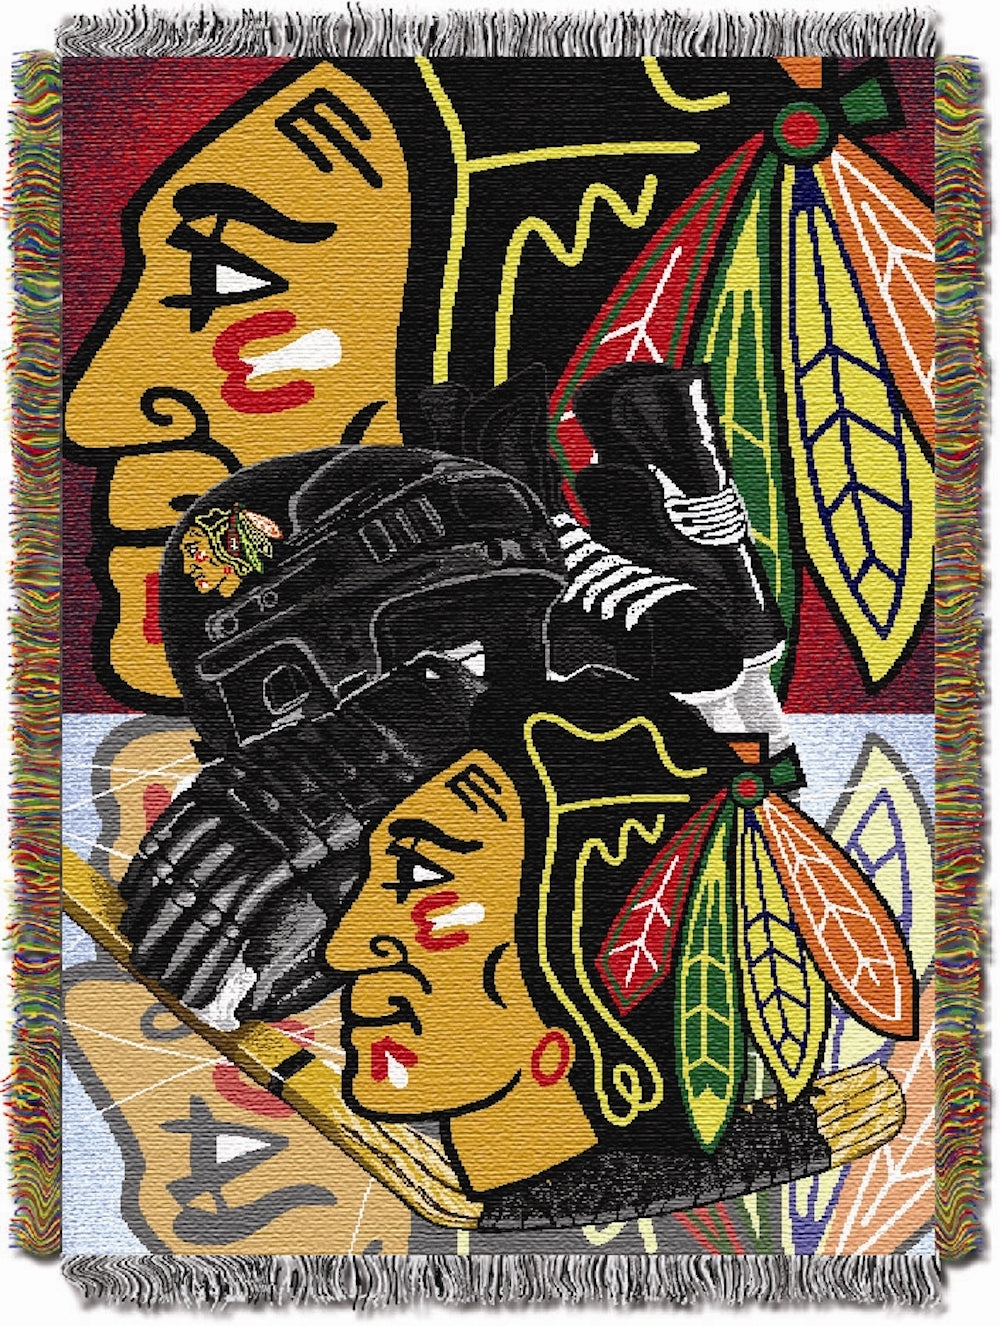 Chicago Blackhawks woven home ice tapestry